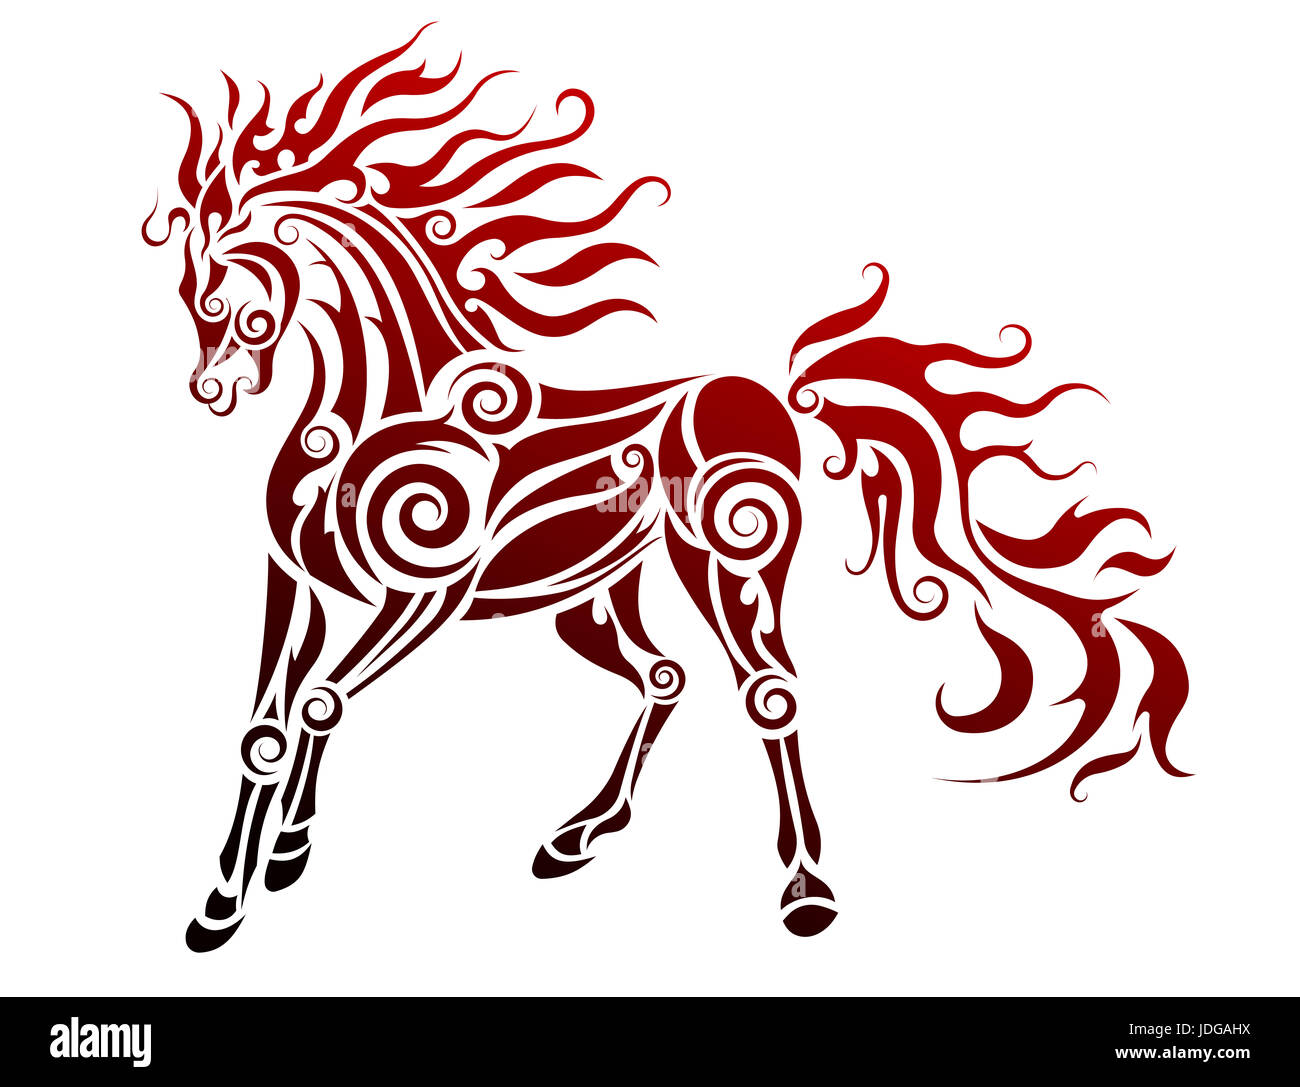 Flaming horse tribal illustration Stock Photo